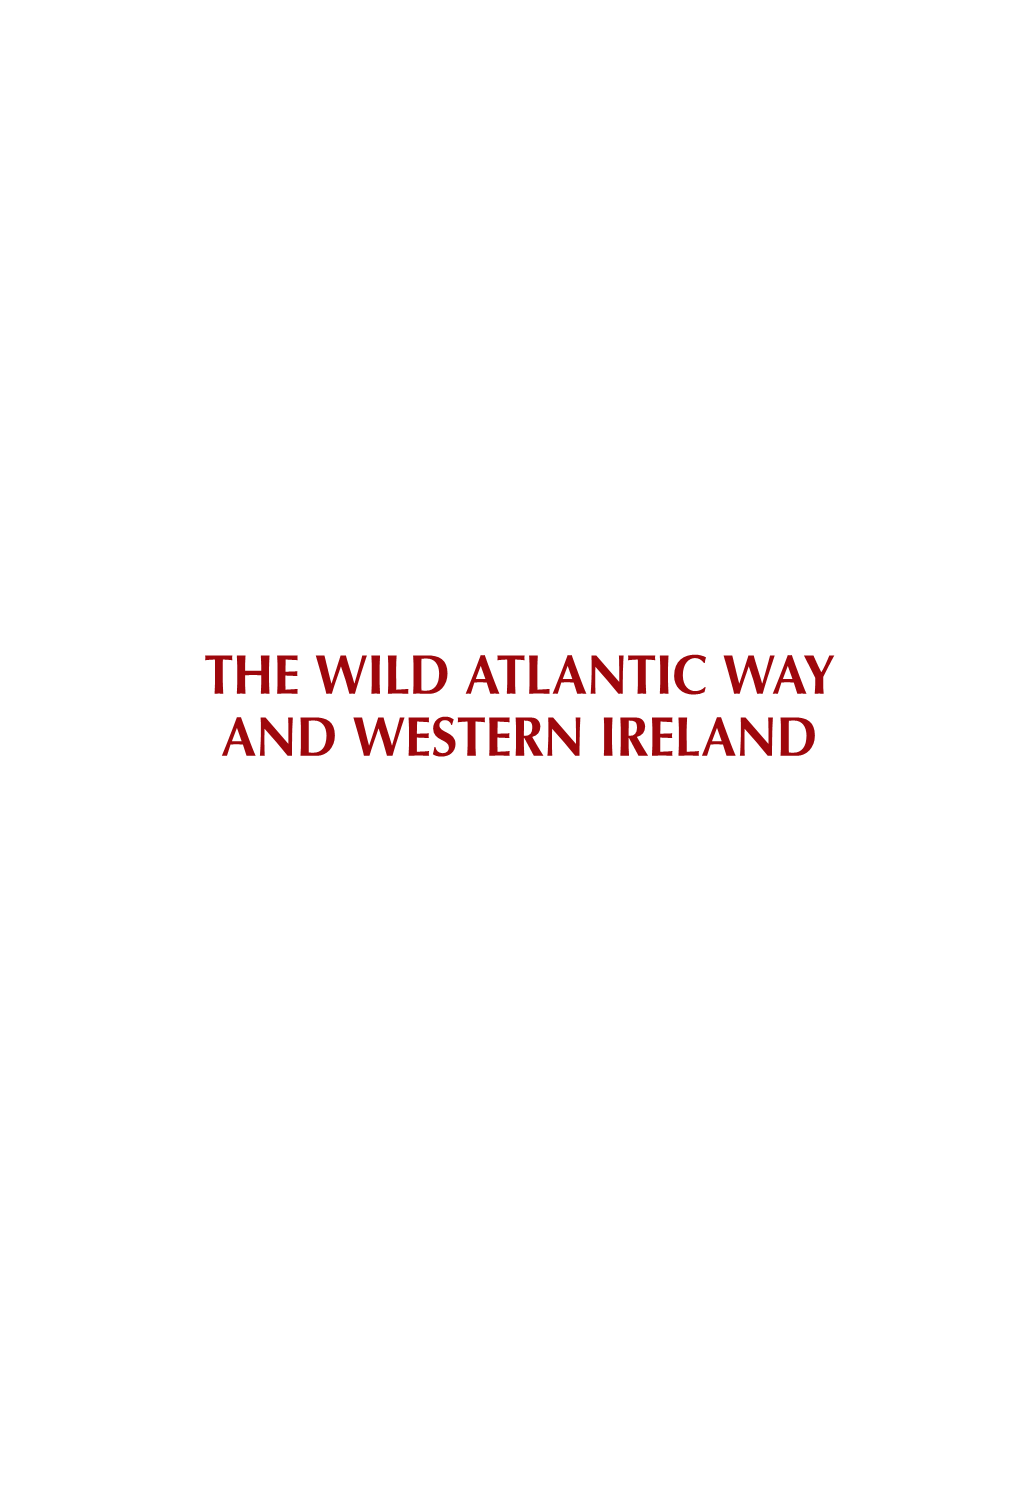 The Wild Atlantic Way and Western Ireland the Wild Atlantic Way and Western Ireland